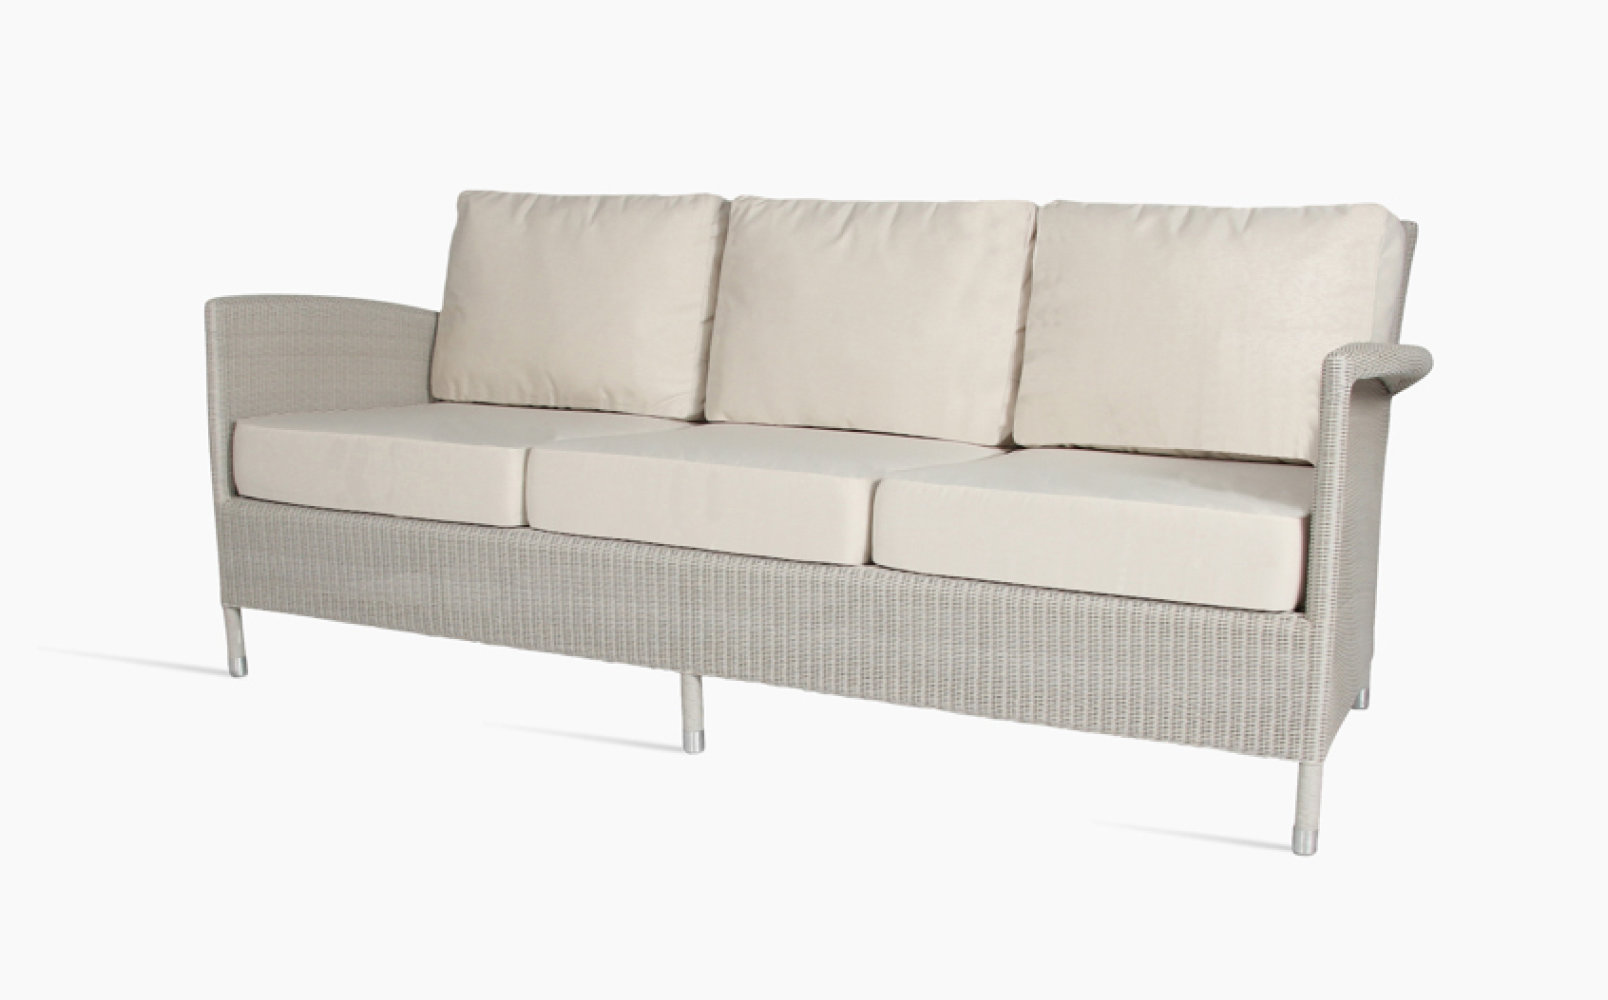 vincent-sheppard-safi-lounge-sofa-3S